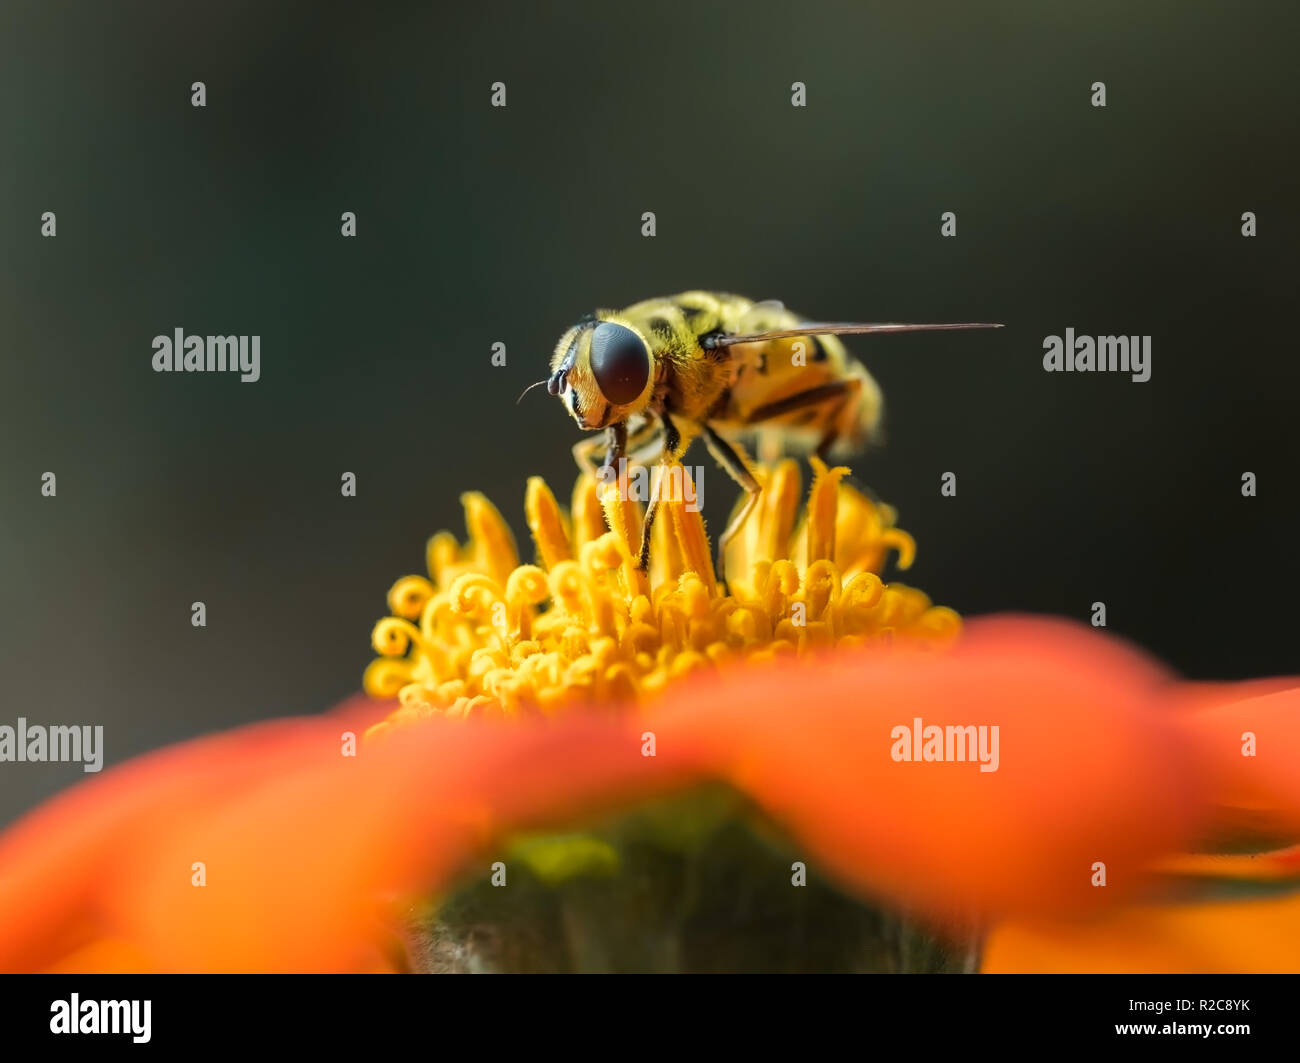 Una mosca activable o Flor volar (Syrphid) polinizando una naranja girasol mexicano (Tithonia rotundifolia). Foto de stock